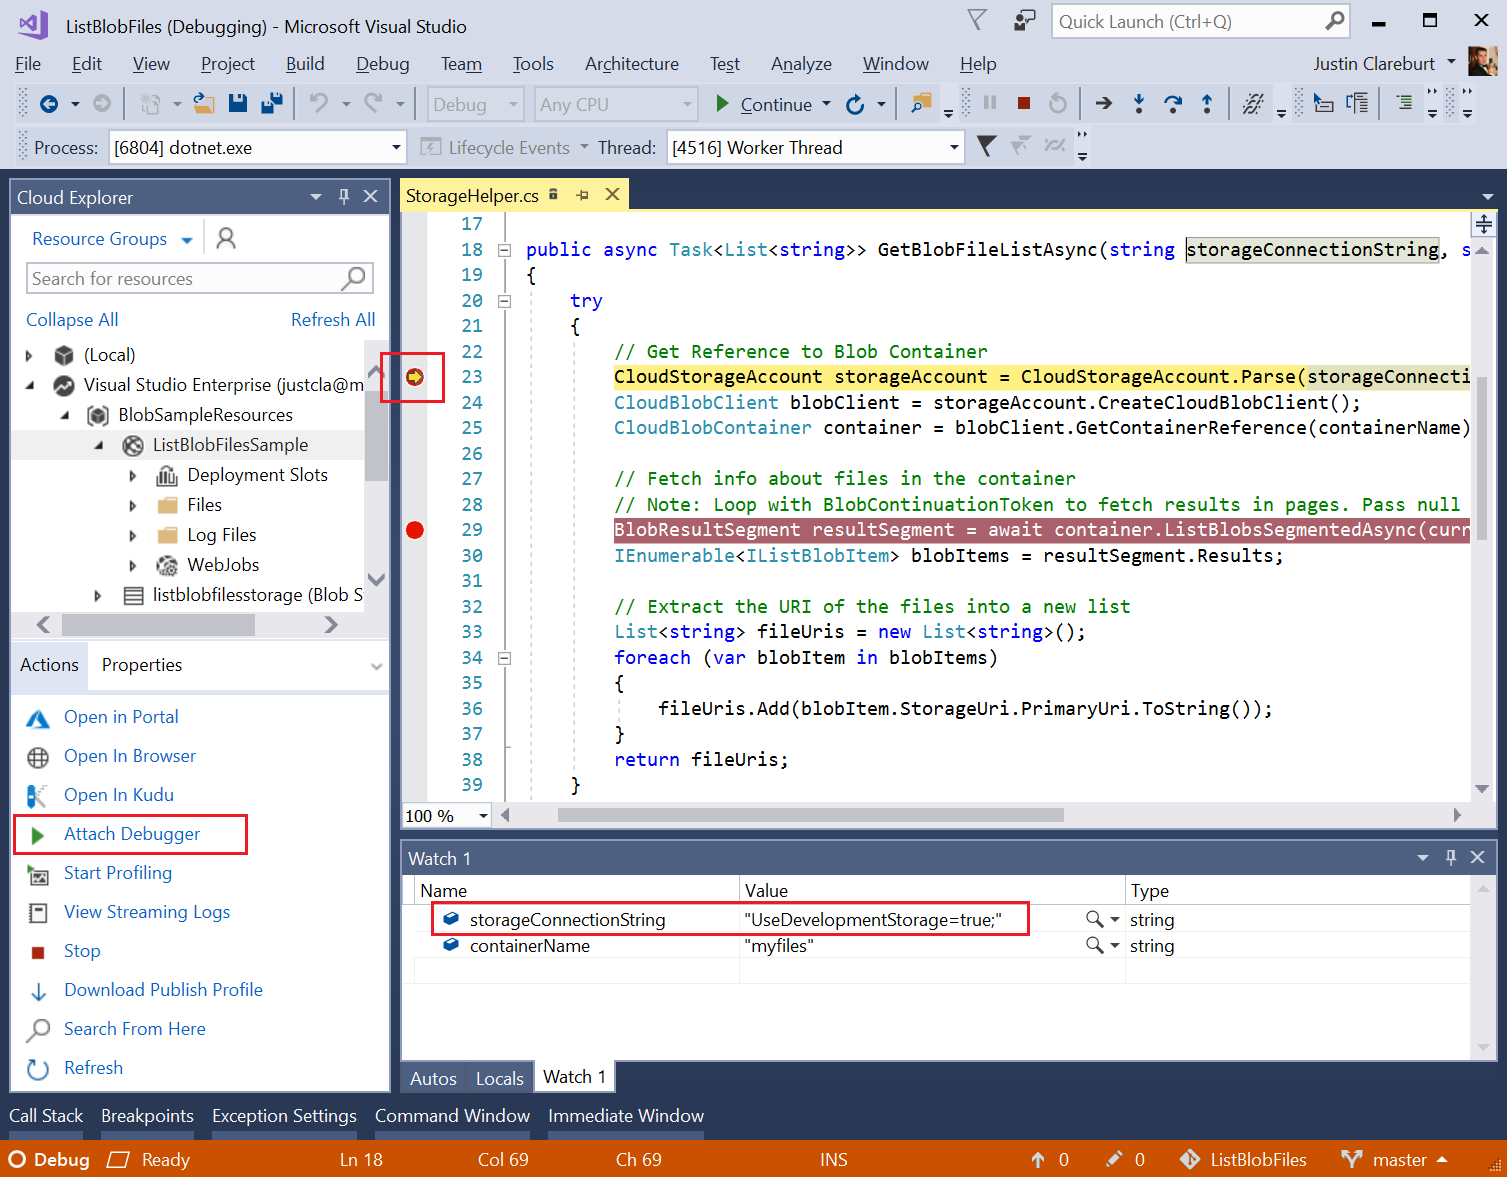 Remote Debugging in Visual Studio